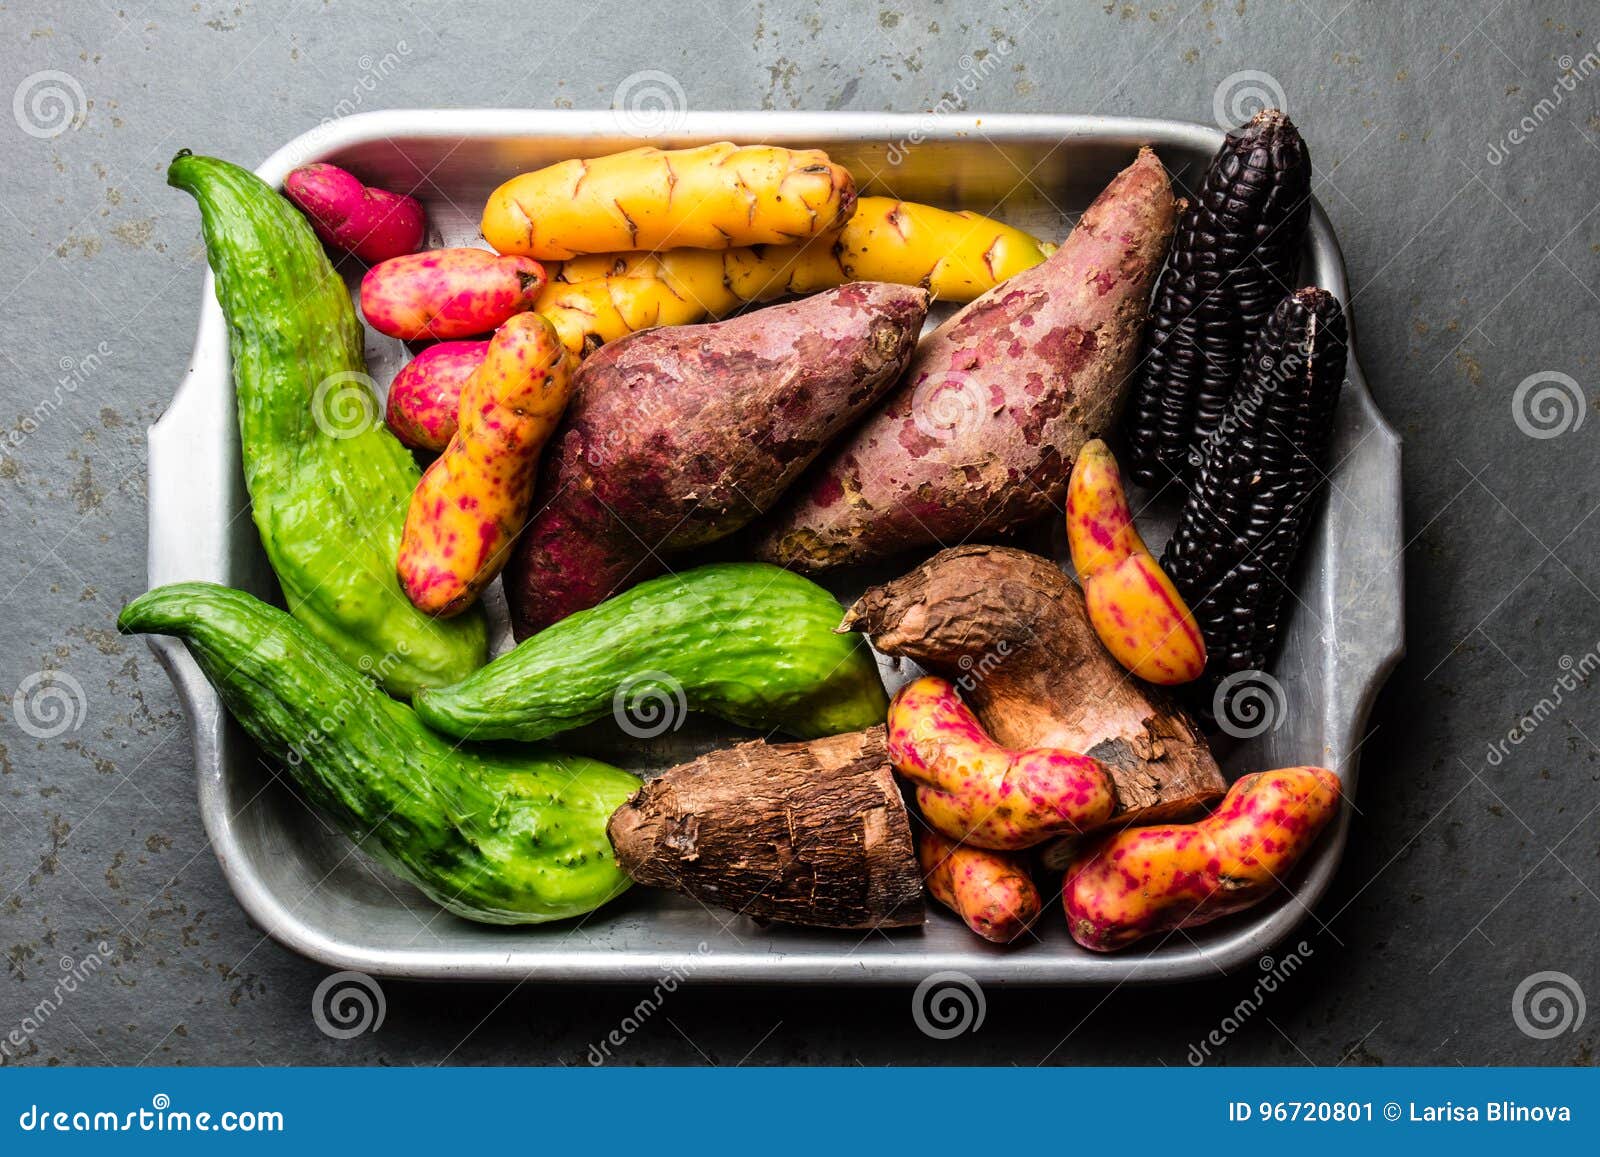 fresh peruvian latin american vegetables caigua, sweet potatoes, black corn, camote, yuca